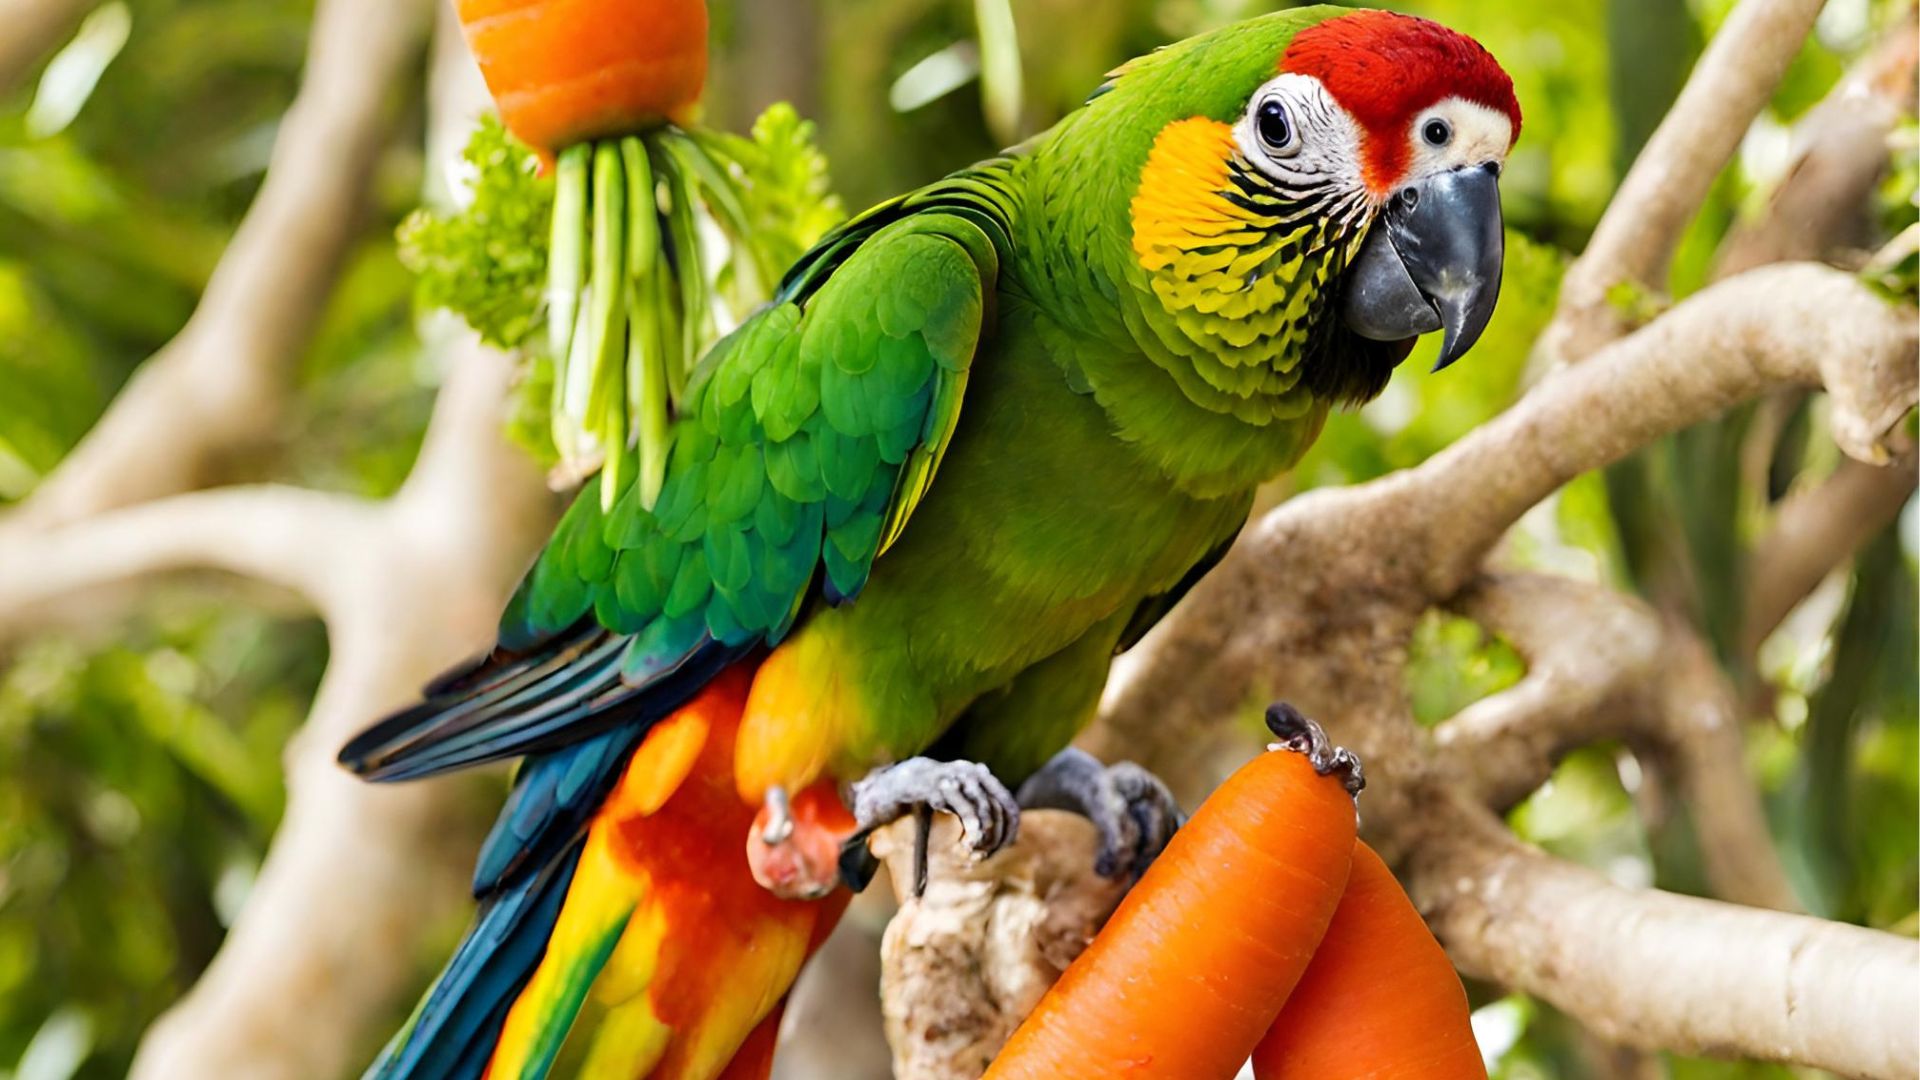 can parrots eat carrots